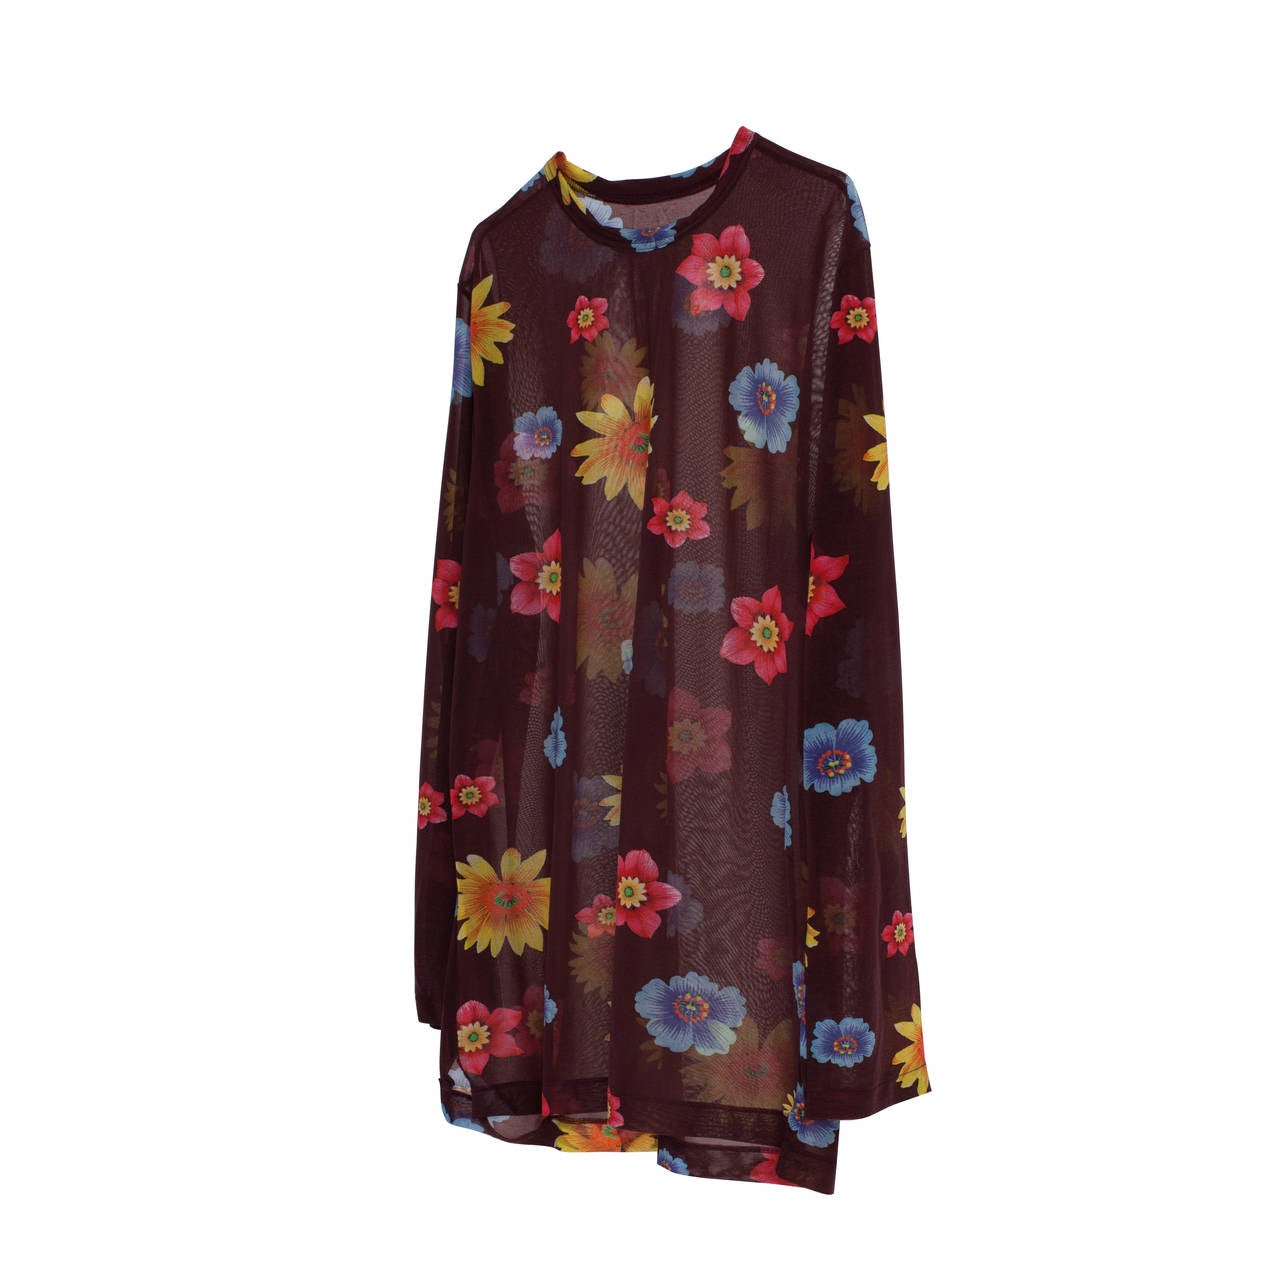 Yohji Yamamoto spring / summer 2002 Collection, vibrant colours flower 
print shirt.

Sz : 3 
Shoulder 46 cm
Length 73 cm